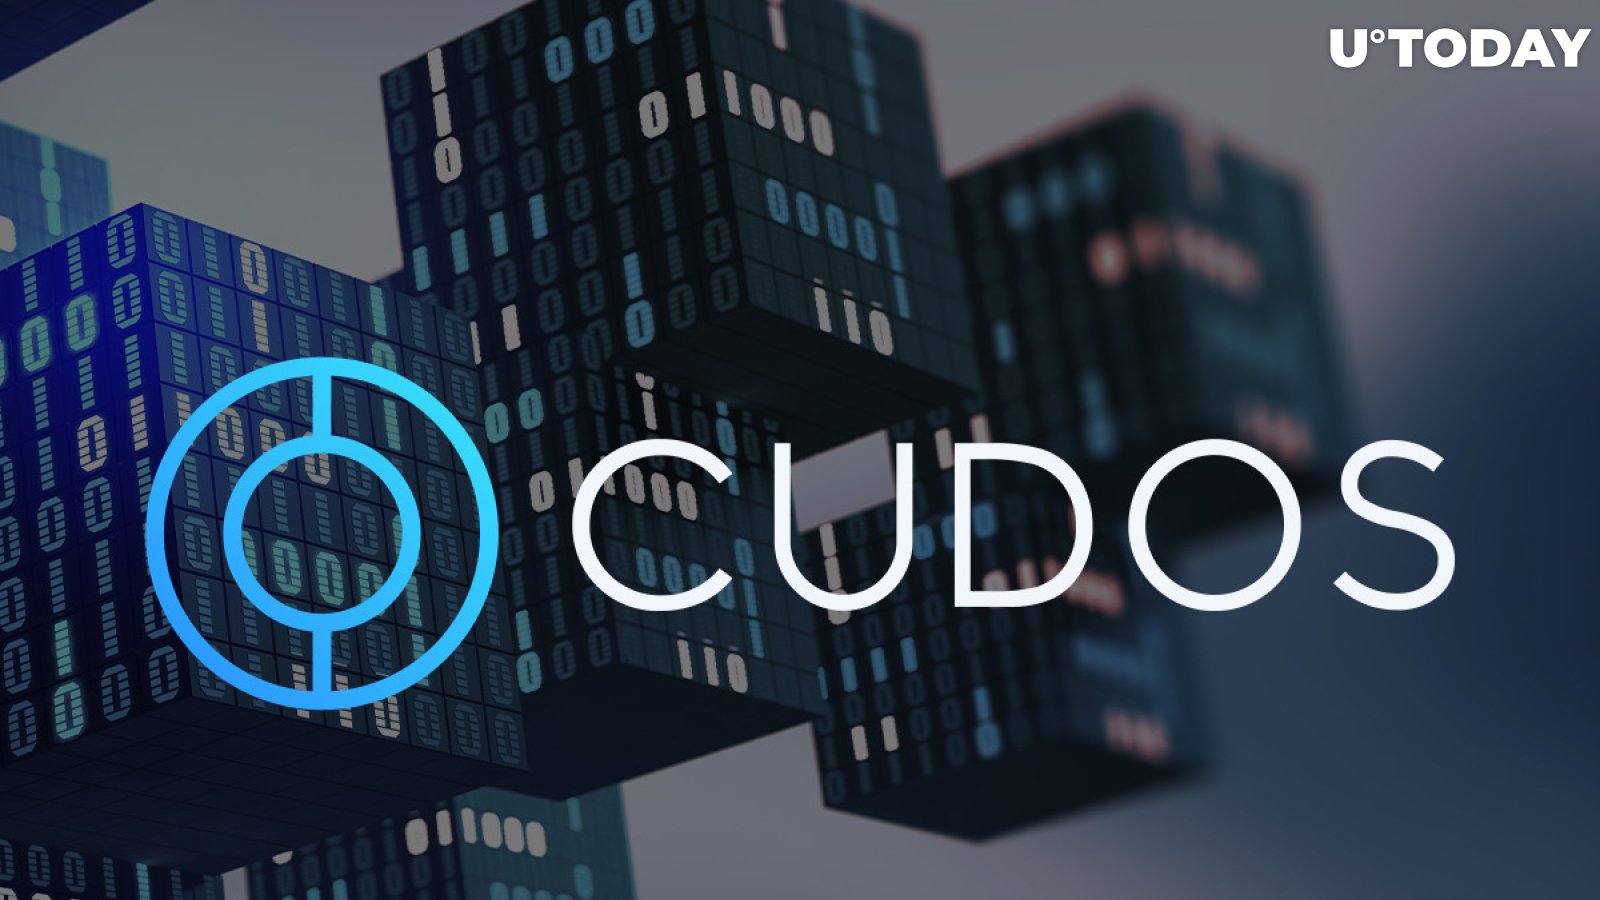 Cudos Decentralized Cloud Platform Launches CUDOS Token Staking: Details